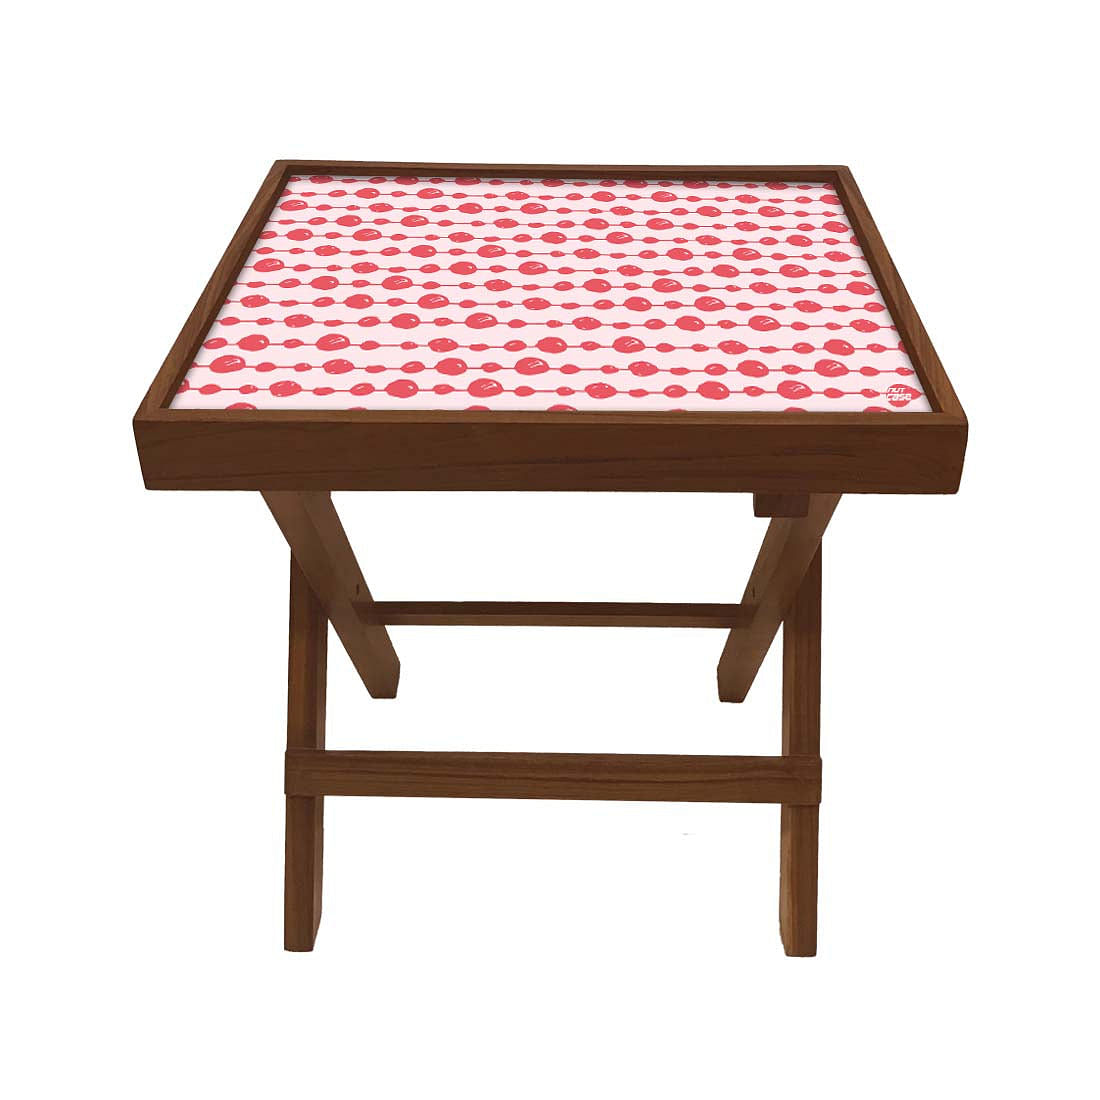 Folding Side Table - Teak Wood -Red Dots Nutcase